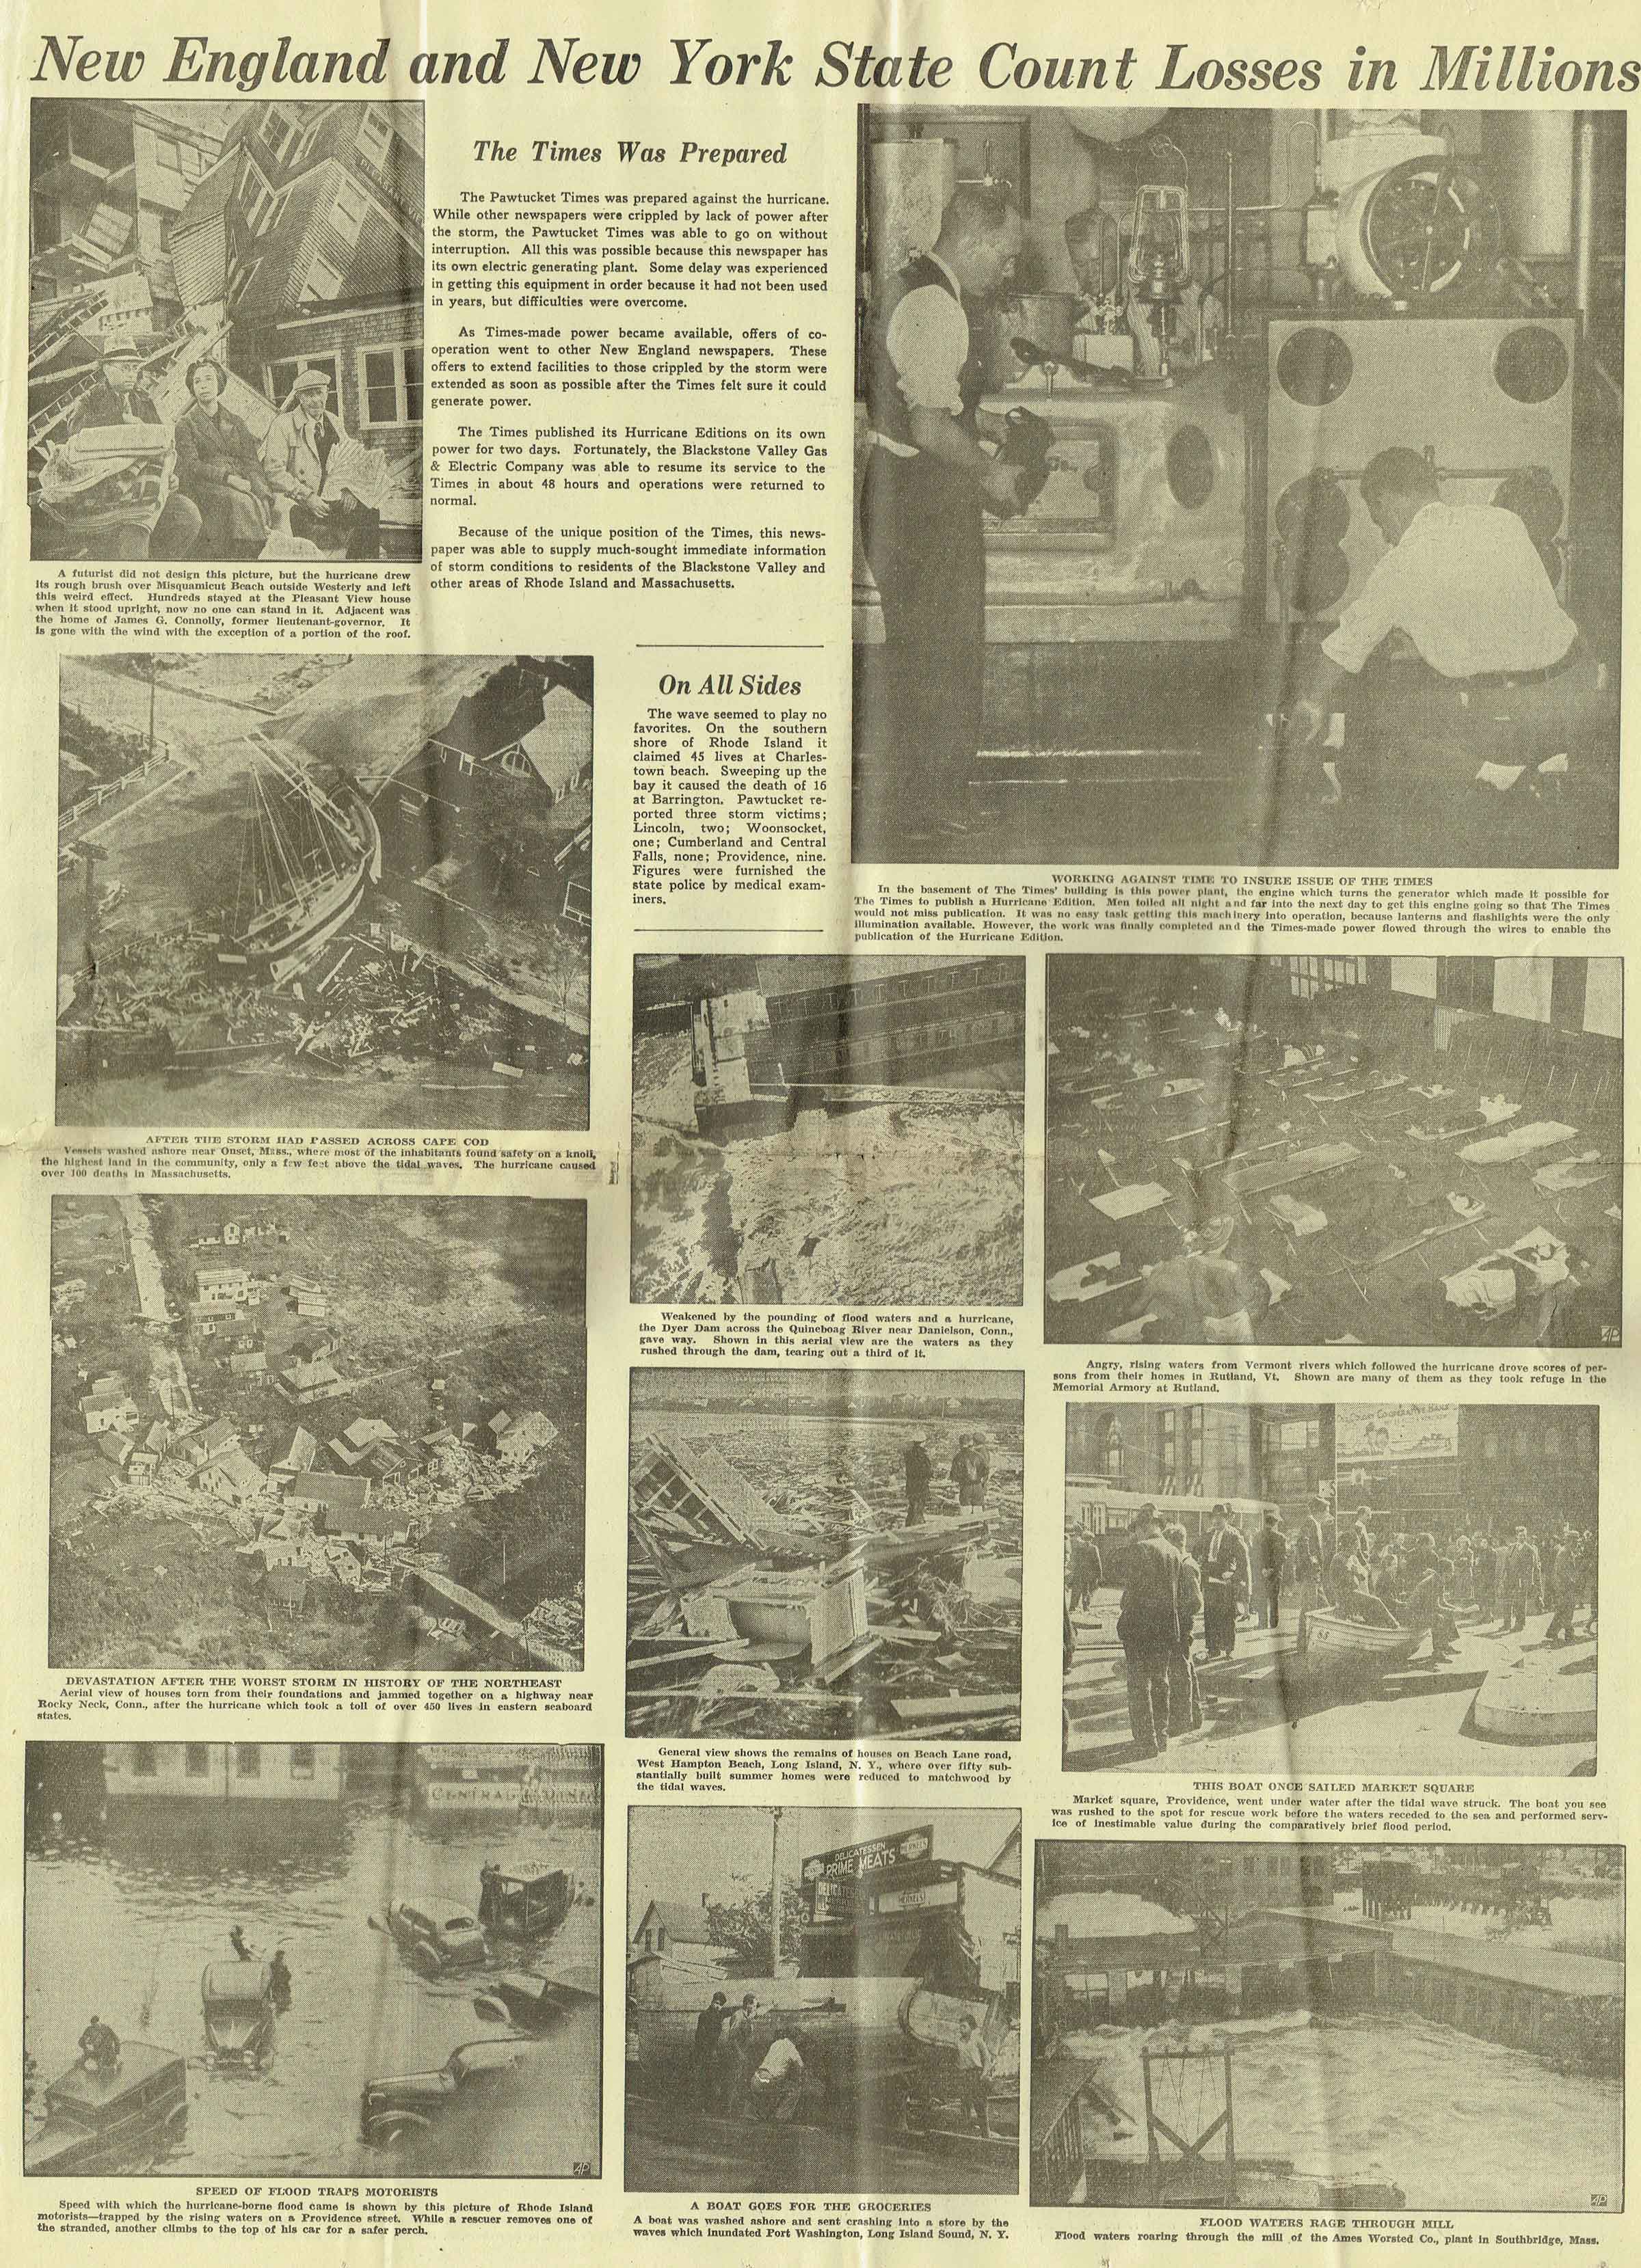 The Pawtucket Times: HURRICANE SOUVENIR, published Sept. 30, 1938 PAGE 9